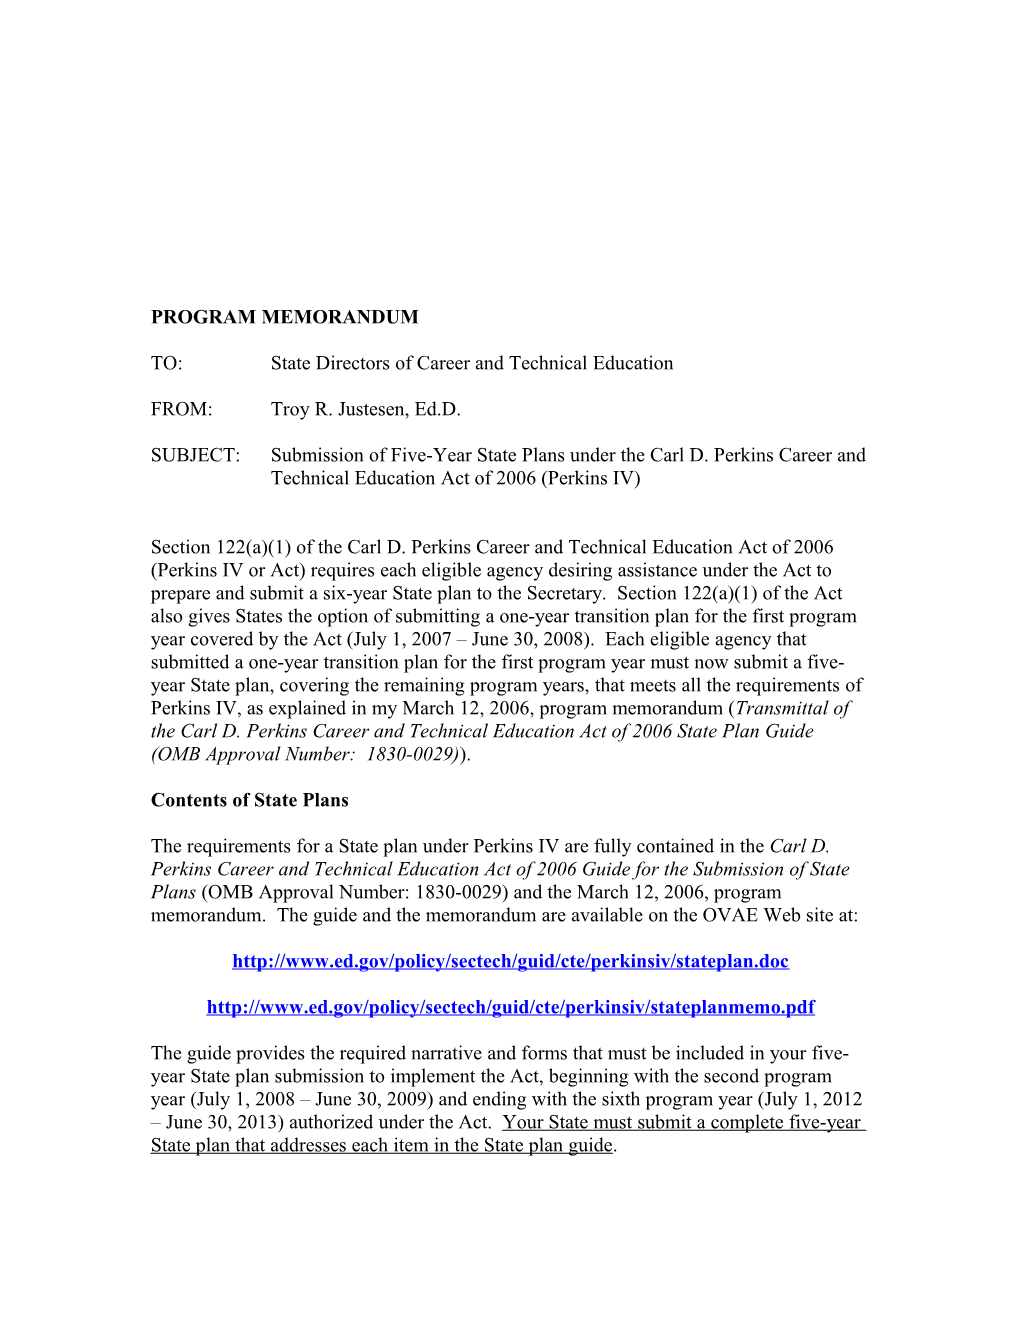 Program Memorandum Submission of Five-Year State Plans Under the Carl D. Perkins Career